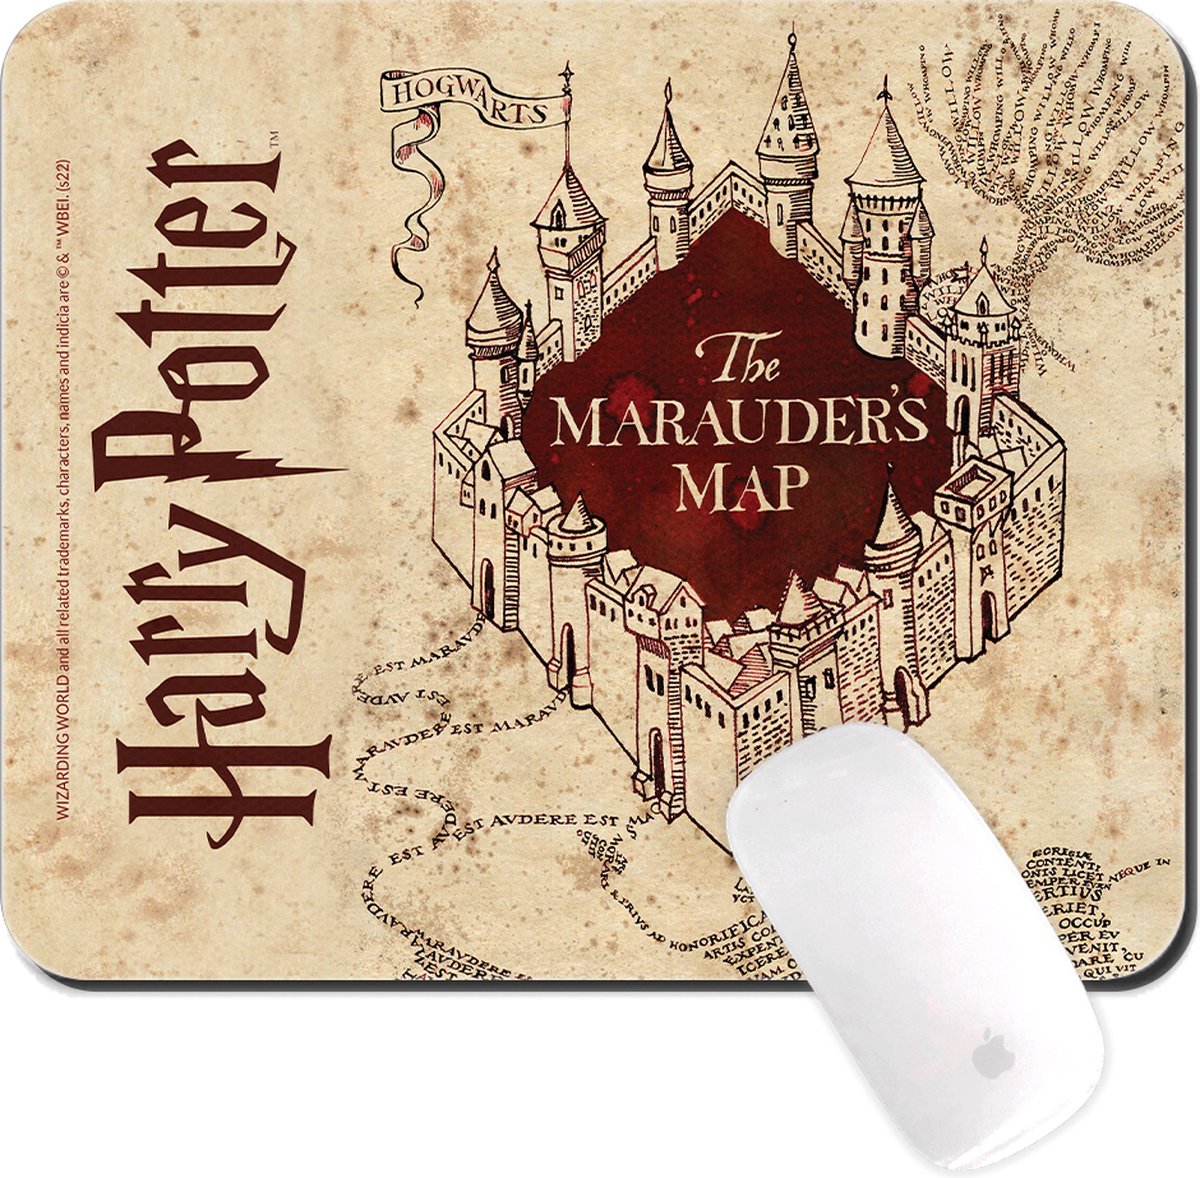 Harry Potter The Marauders Map - Muismat 22x18cm 3mm dik